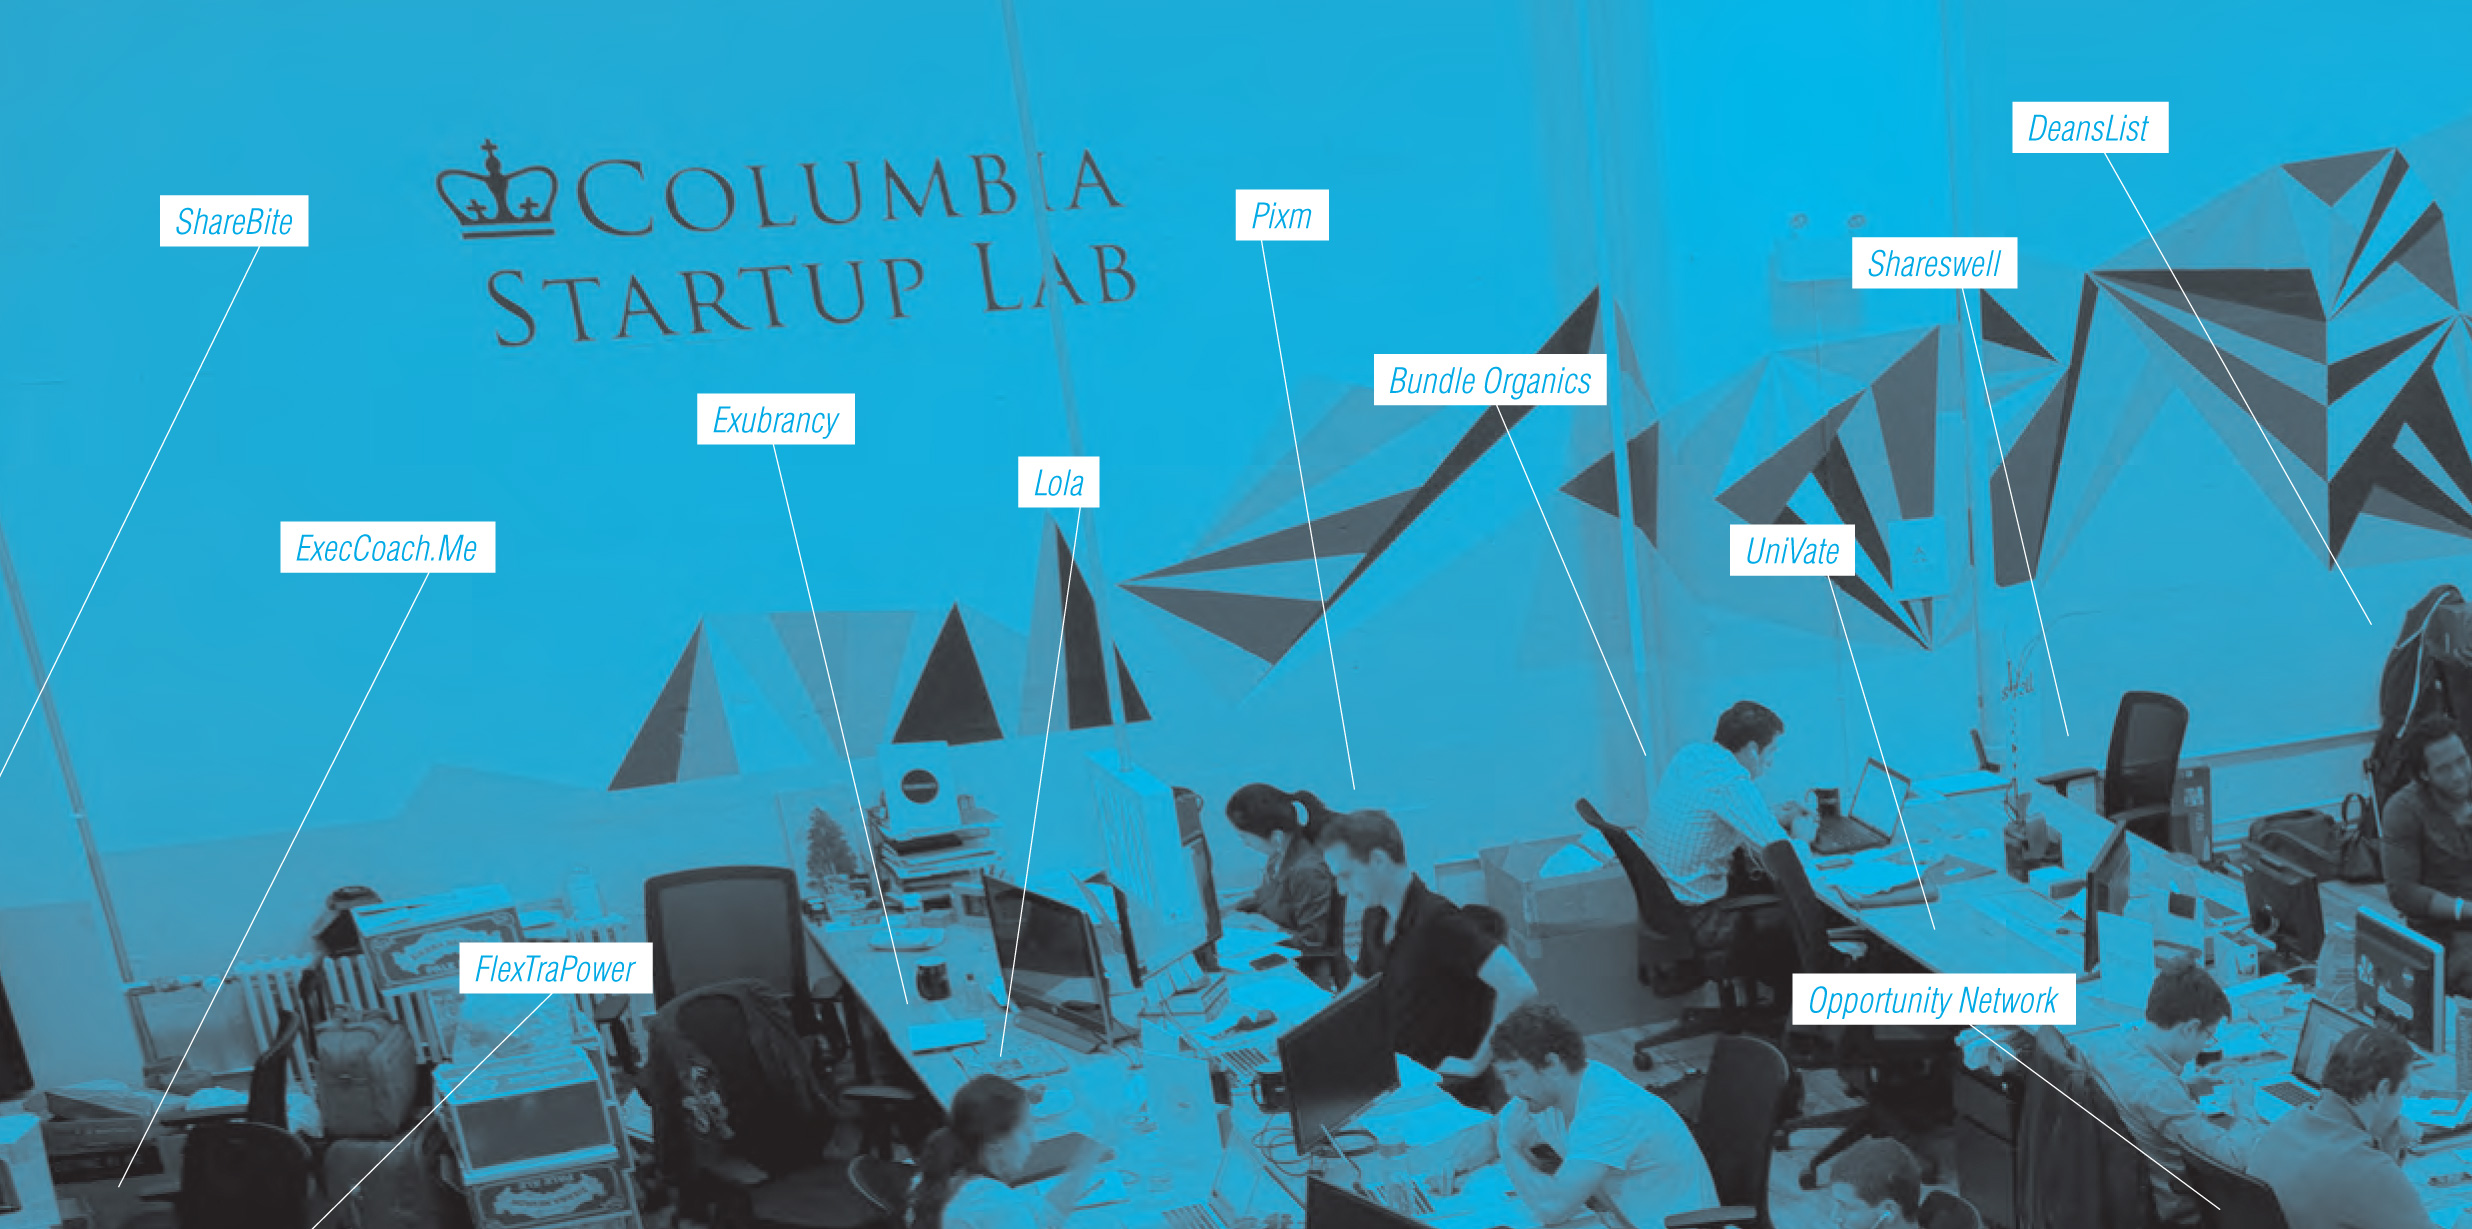 Columbia startup lab